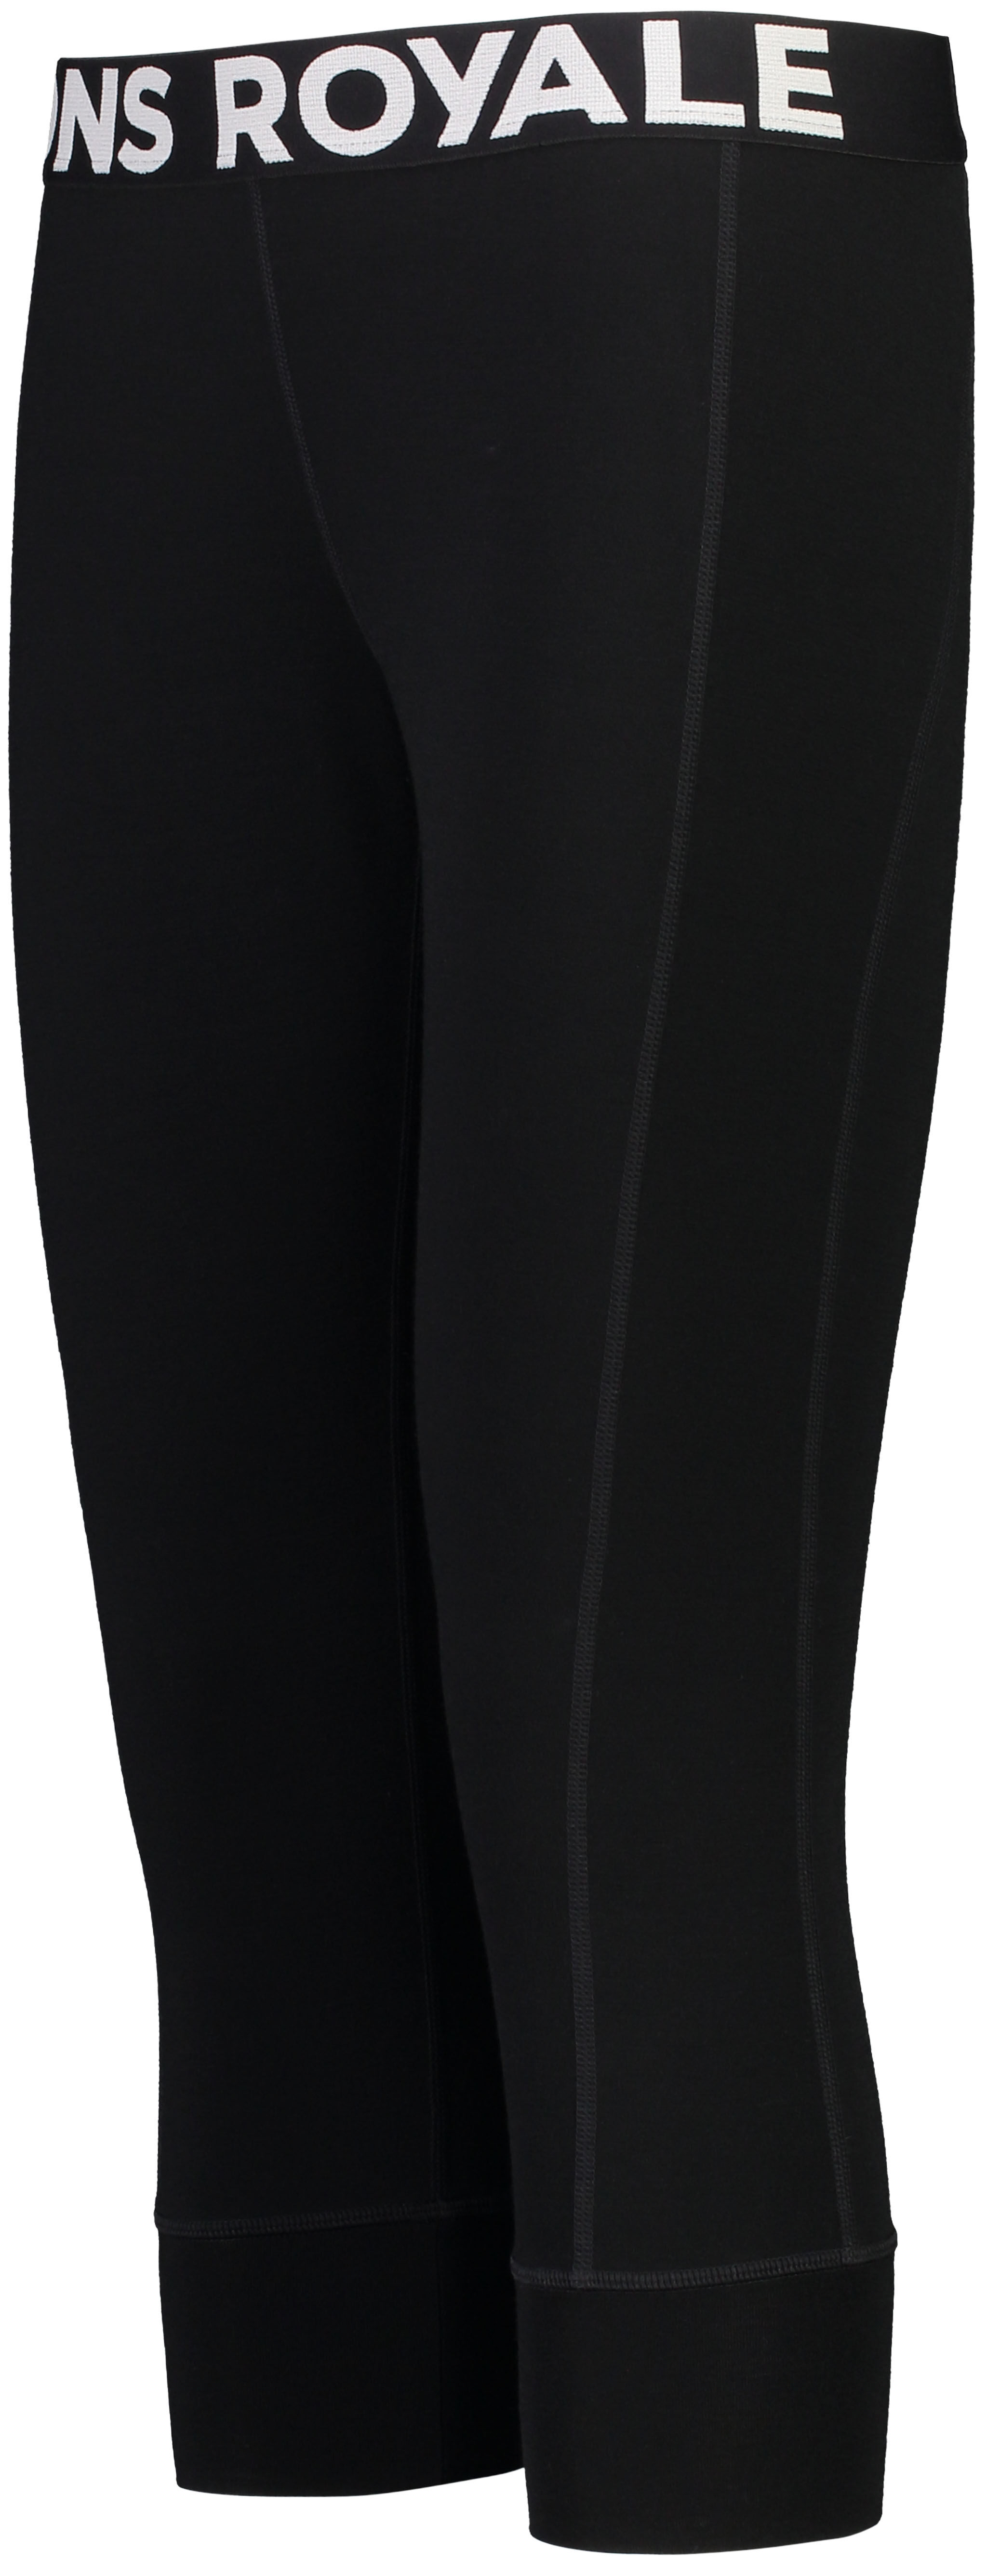 MONS ROYALE CASCADE MERINO FLEX 200 3/4 LEGGING BLACK XS